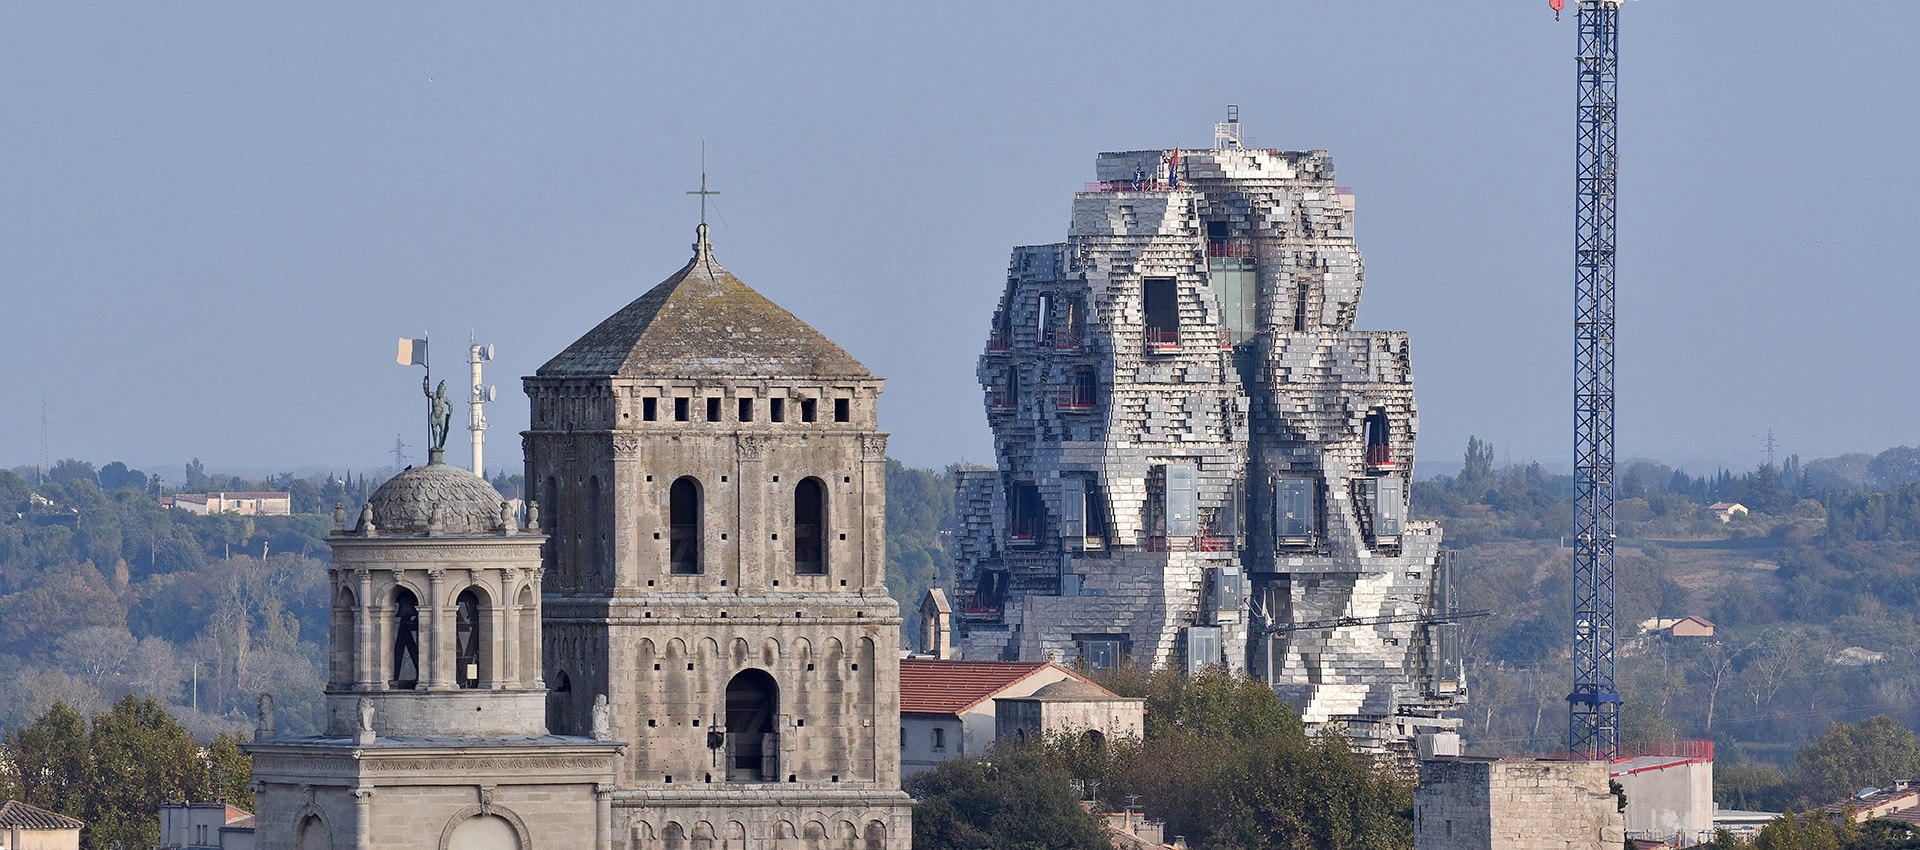 Iwan Baan photographs Frank Gehry's Luma Arles tower